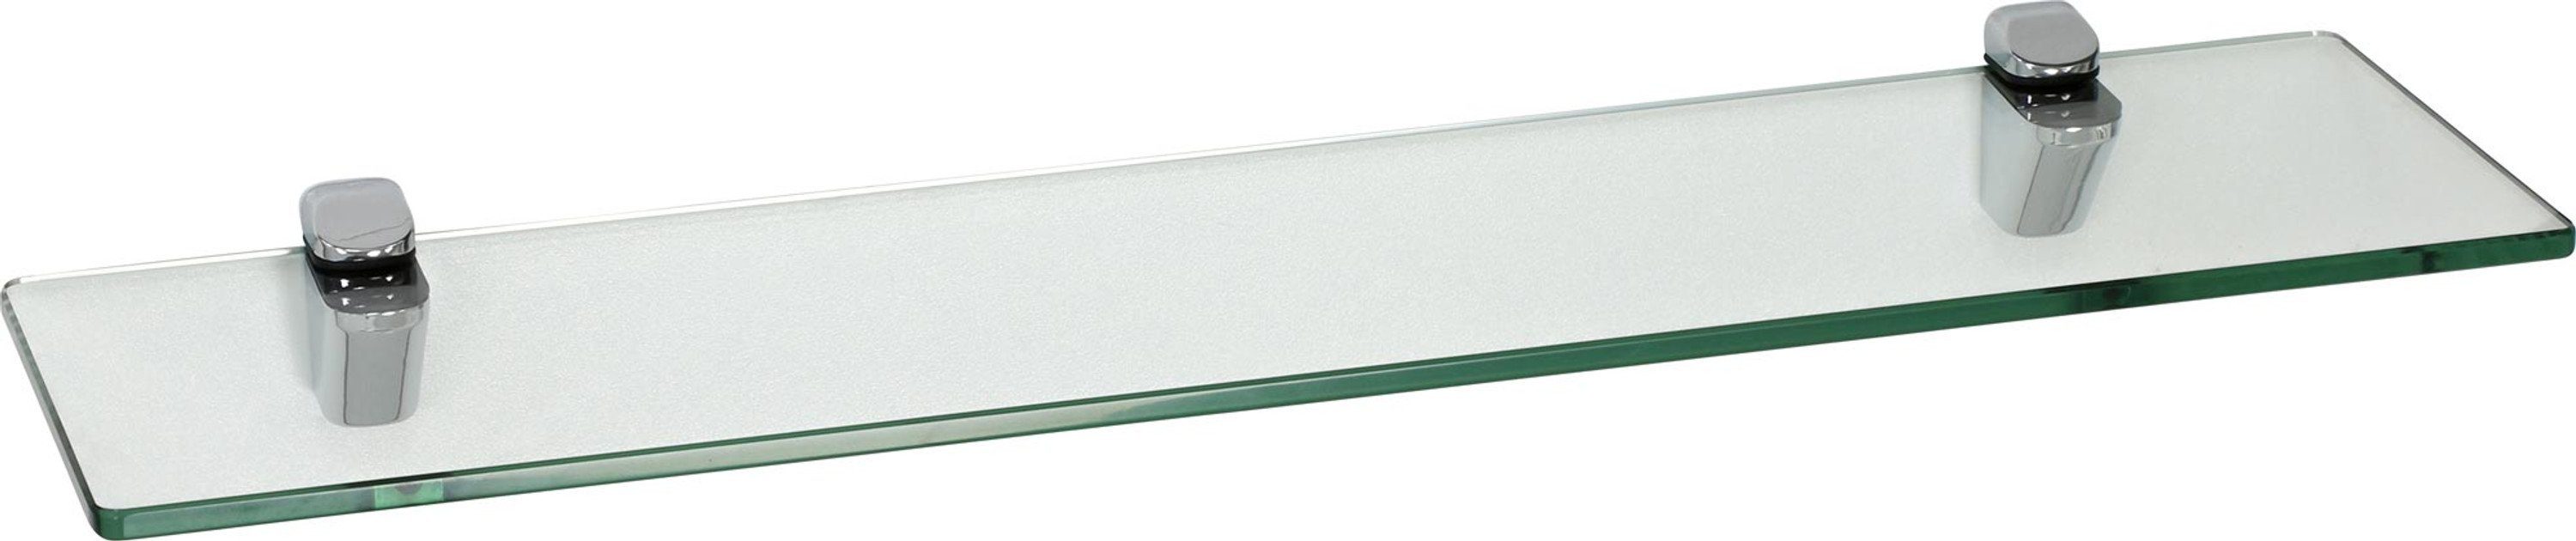 Wandregal Wandregal Glasboden 15 40 klar style ESG-Sicherheitsglas CUCALE aus ib x 10mm + cm Verchromt, Glasregal - Clip